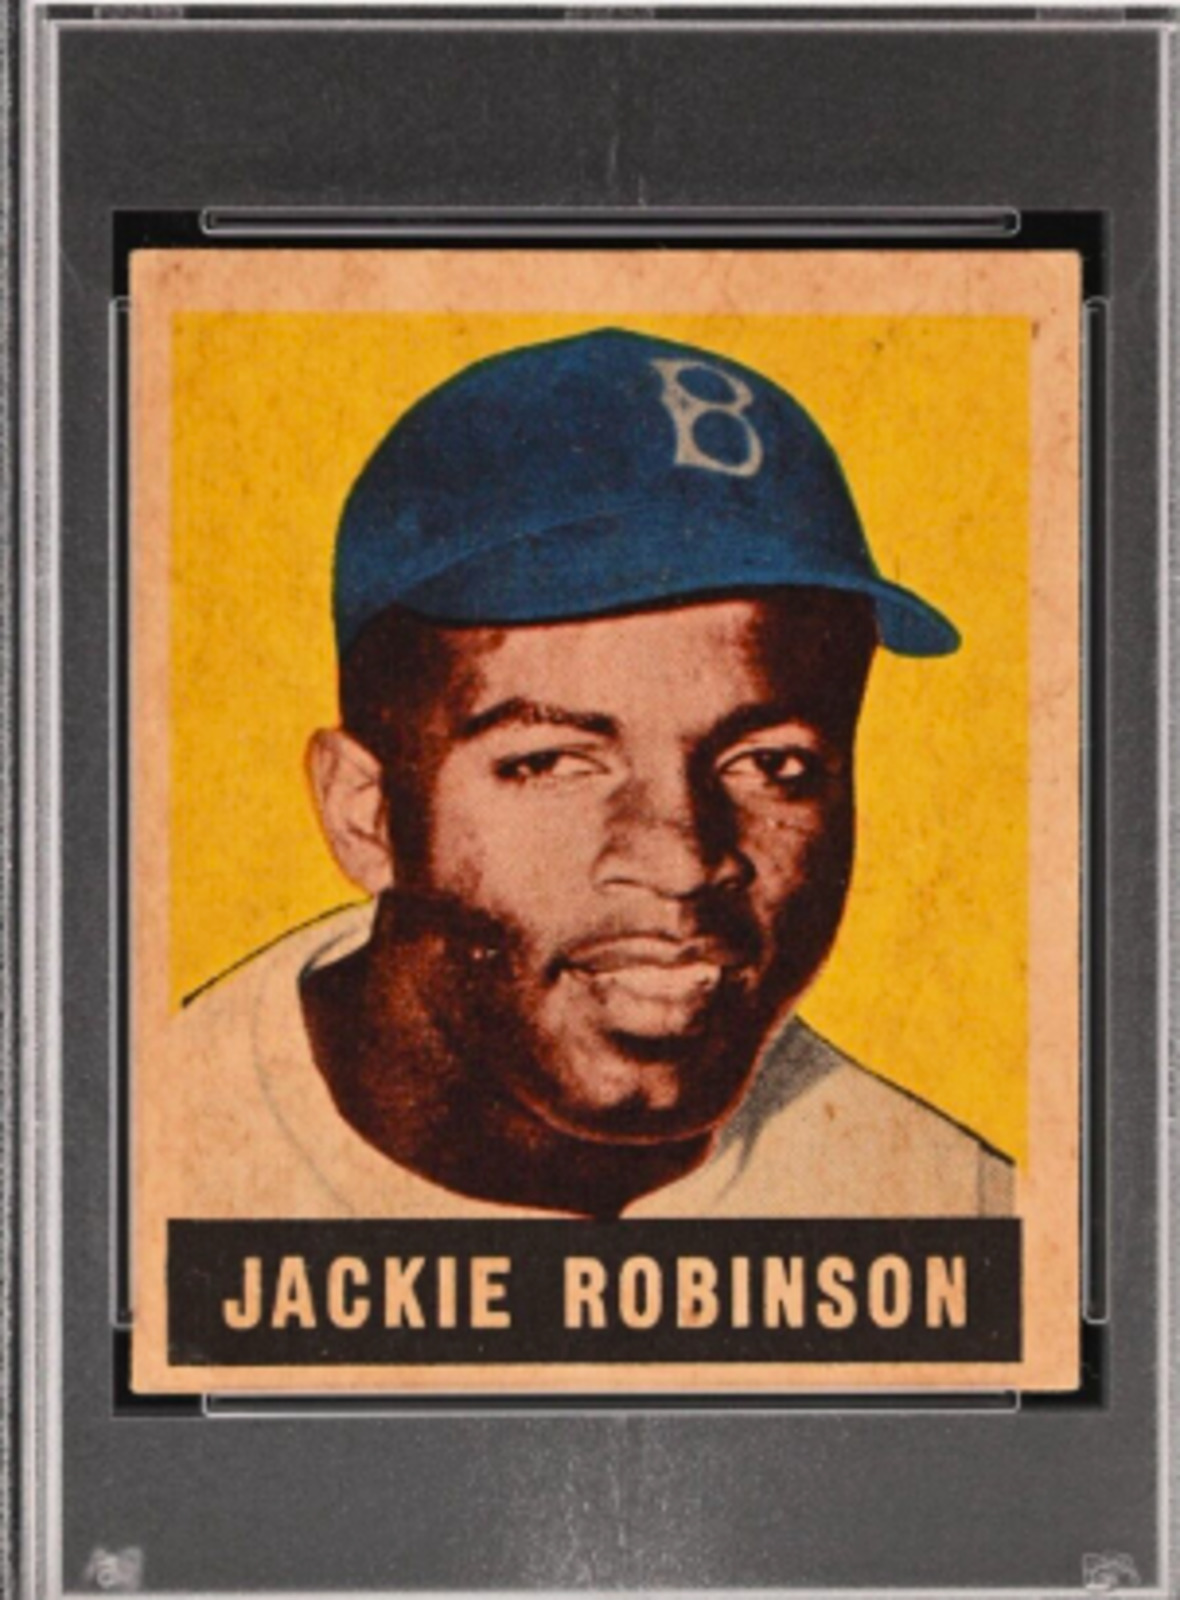 1948 Leaf Jackie Robinson rookie card